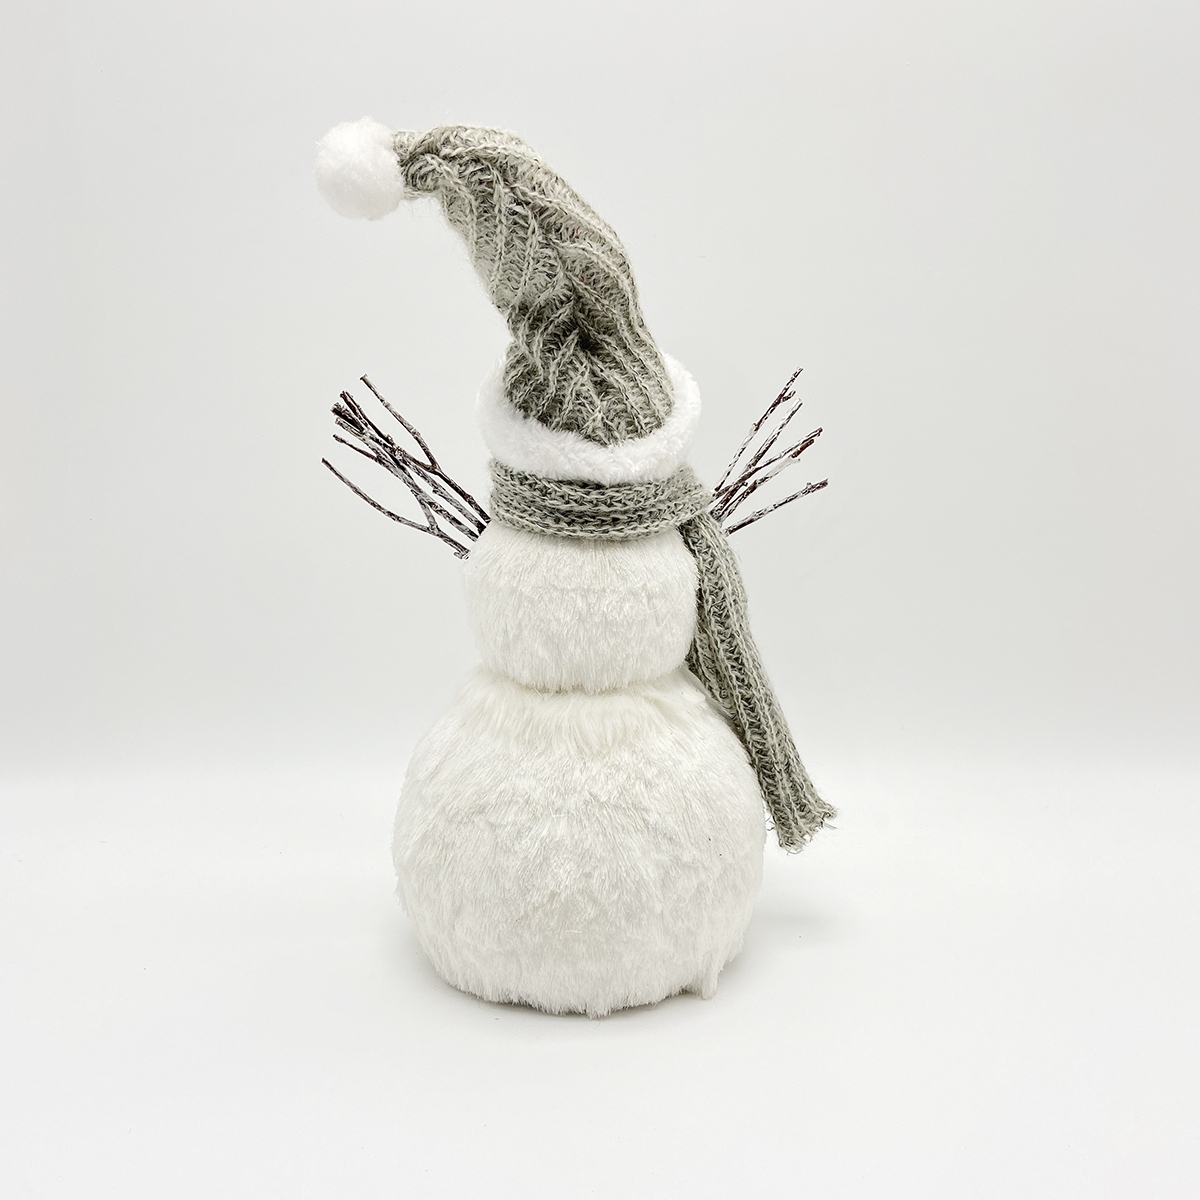 21*16*30CM Artificial Plush Standing Christmas Snowman Figurines-GOON- Home Decoration, Christmas Decoration, Halloween Decor, Harvest Decor, Easter Decor, Thanksgiving Day Decor, Party Decor